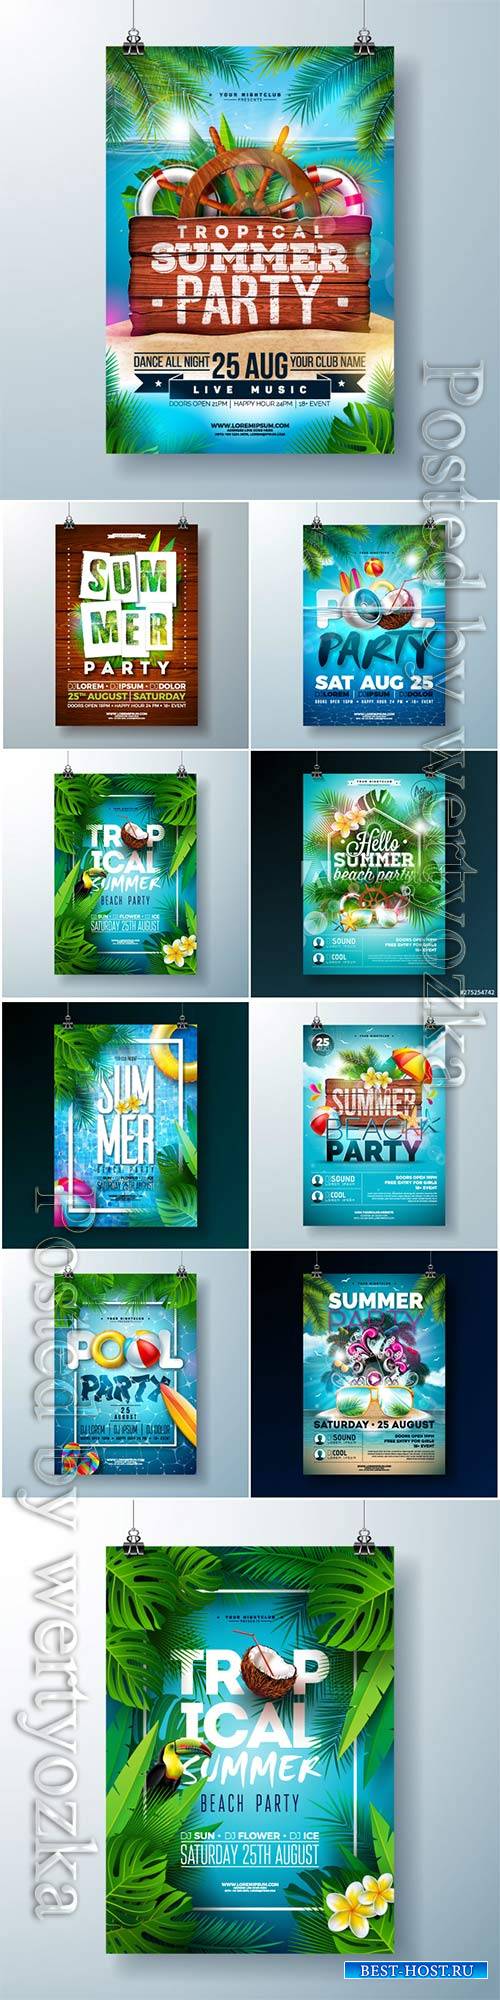 Summer beach party flyer vector design